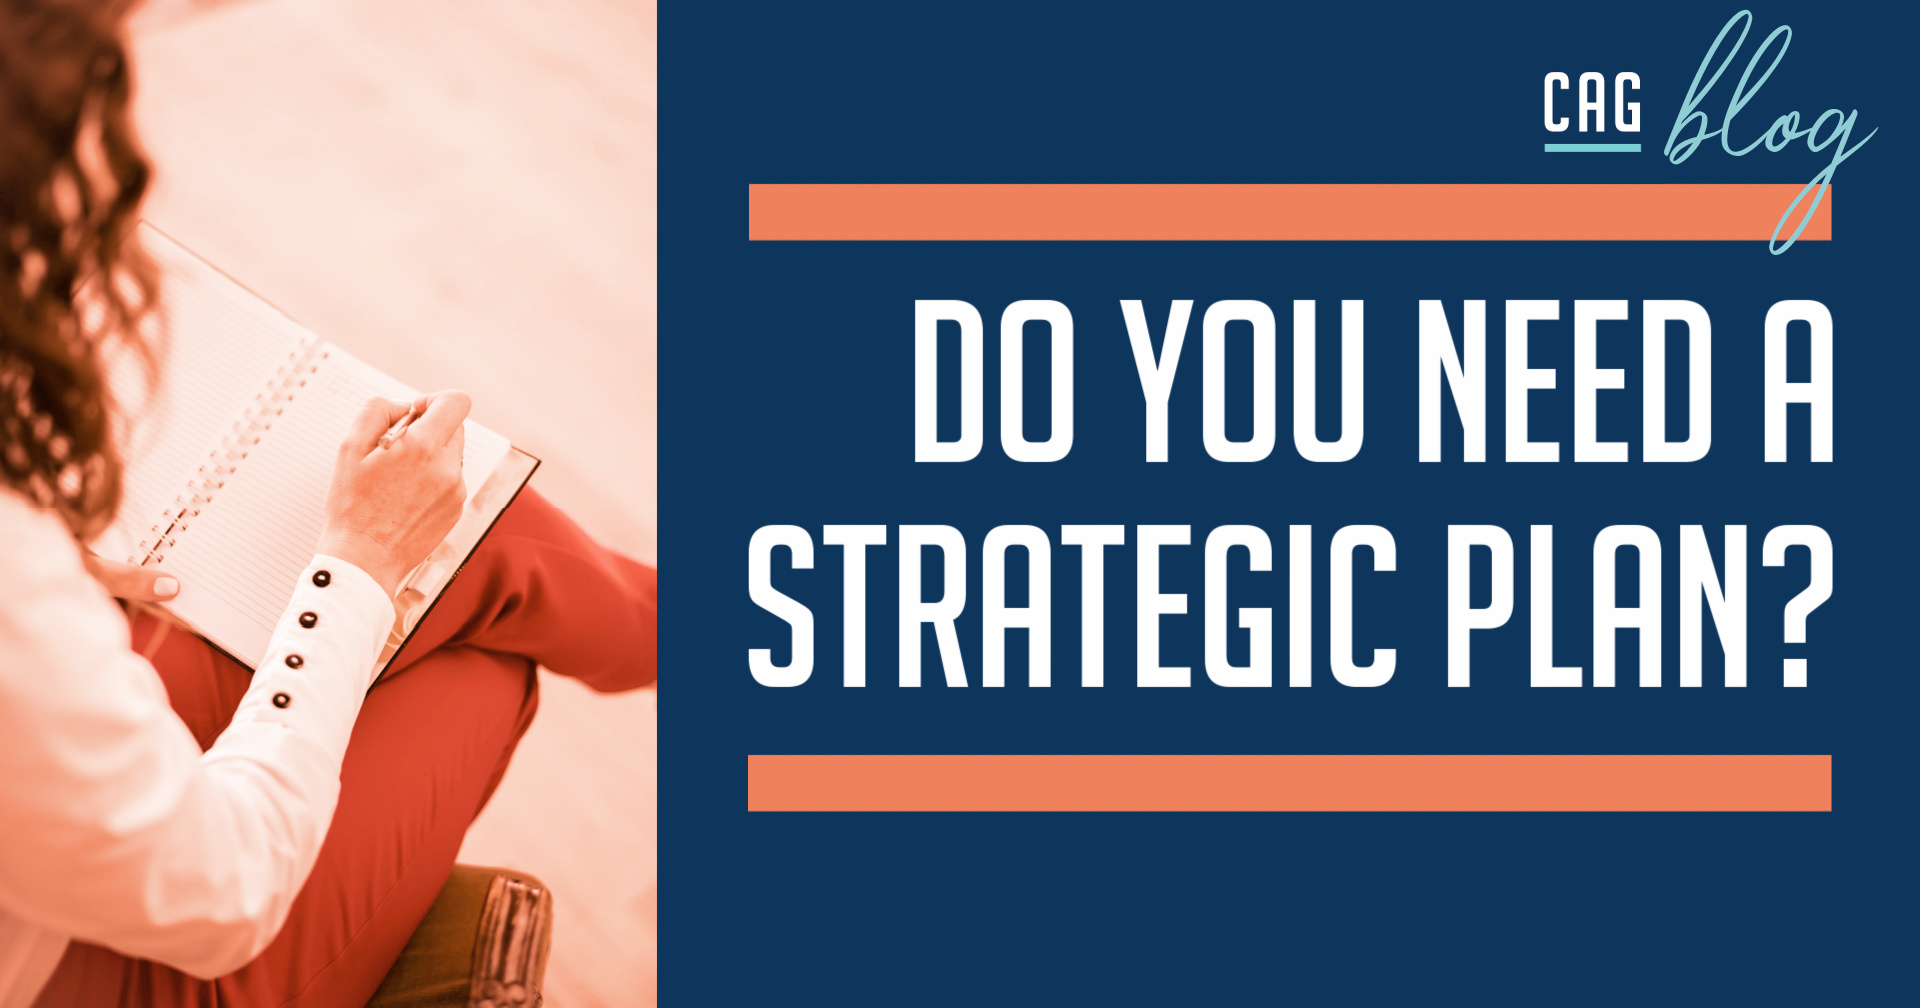 Do you need a strategic plan